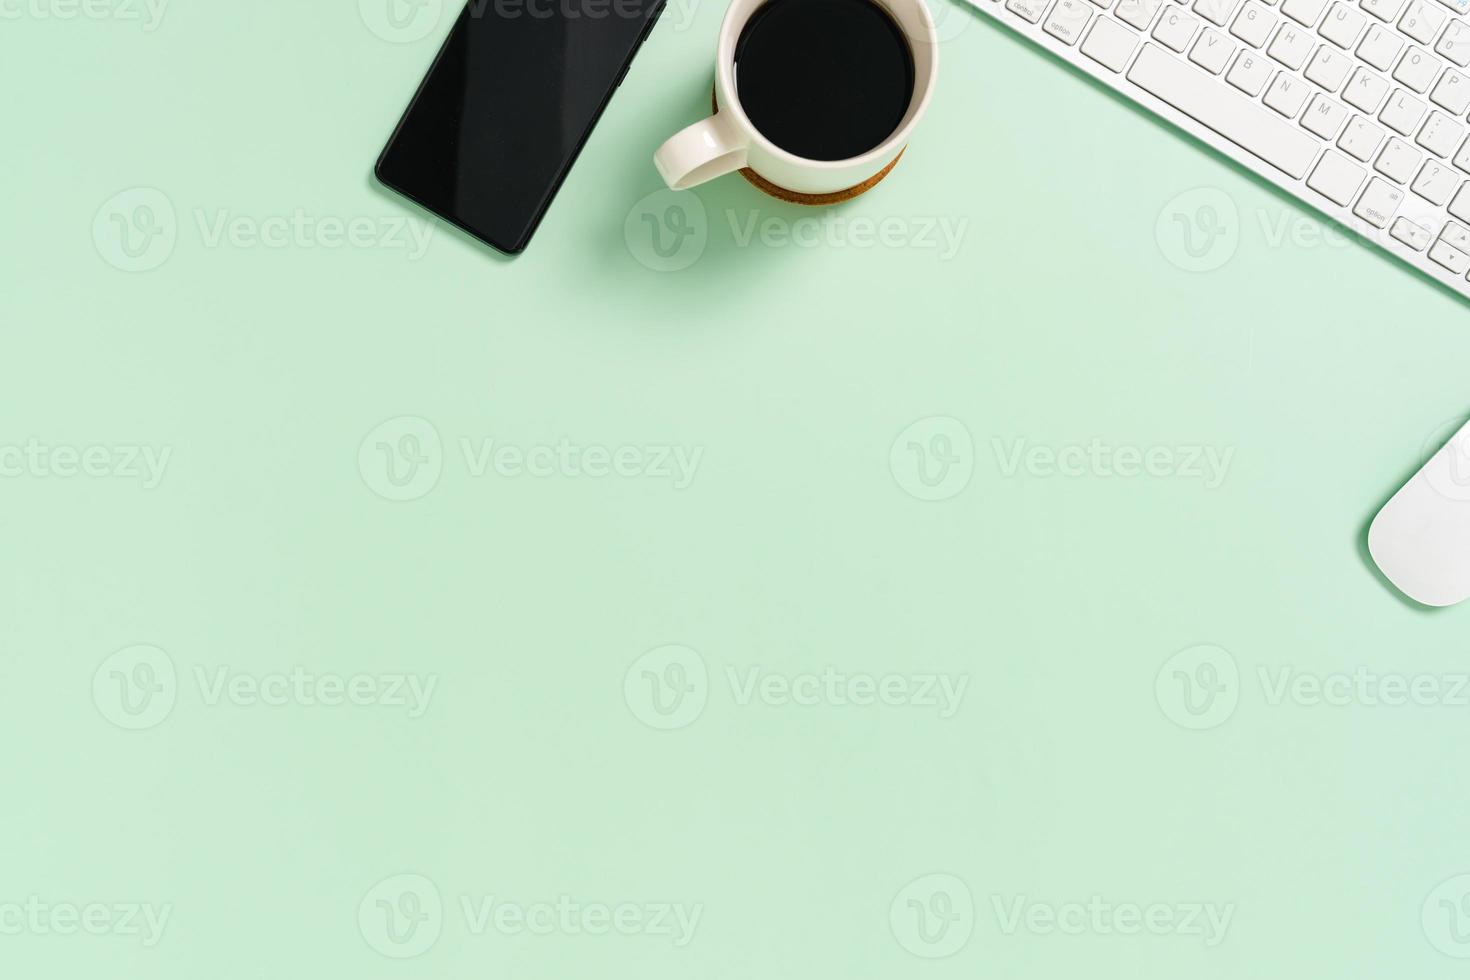 minimale werkruimte - creatieve platliggende foto van werkruimtebureau. bovenaanzicht bureau met toetsenbord en muis op pastel groene kleur achtergrond. bovenaanzicht met kopieerruimte, platliggende fotografie.